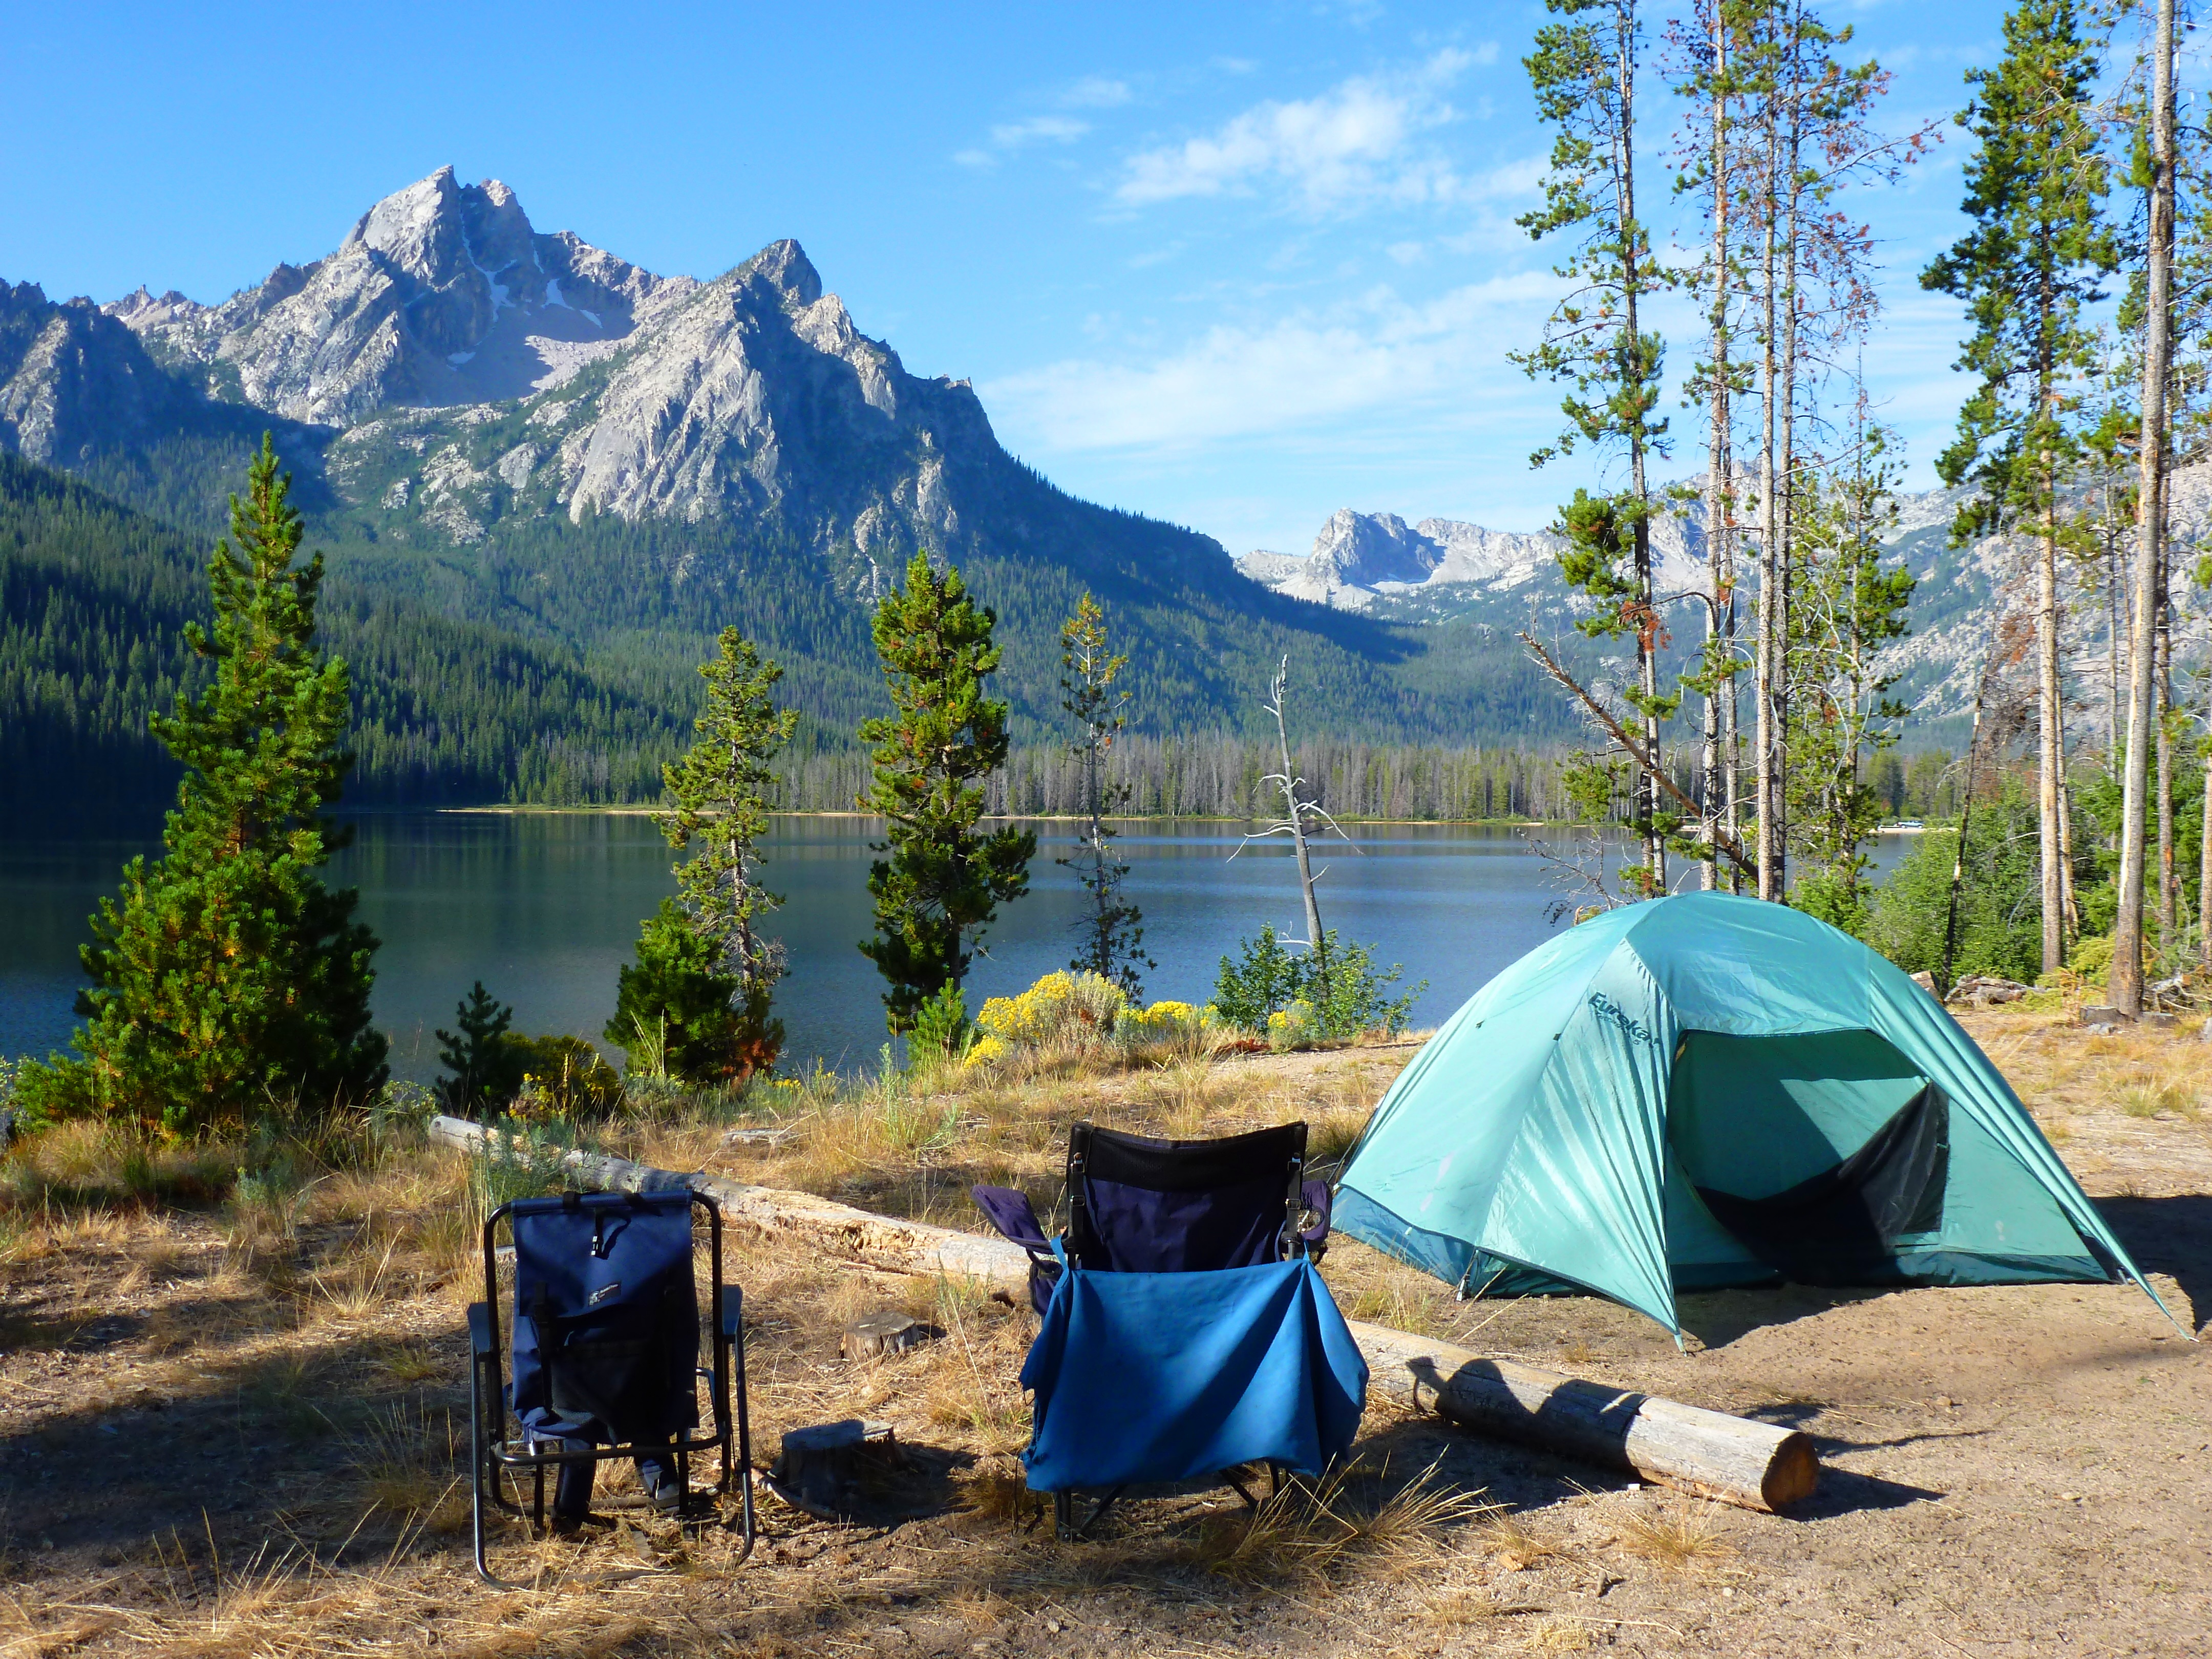 Only camping. Кемпинг в Карелии. Озеро Рица кемпинг у озера. Поход с палатками. Мультинские озера палатки.